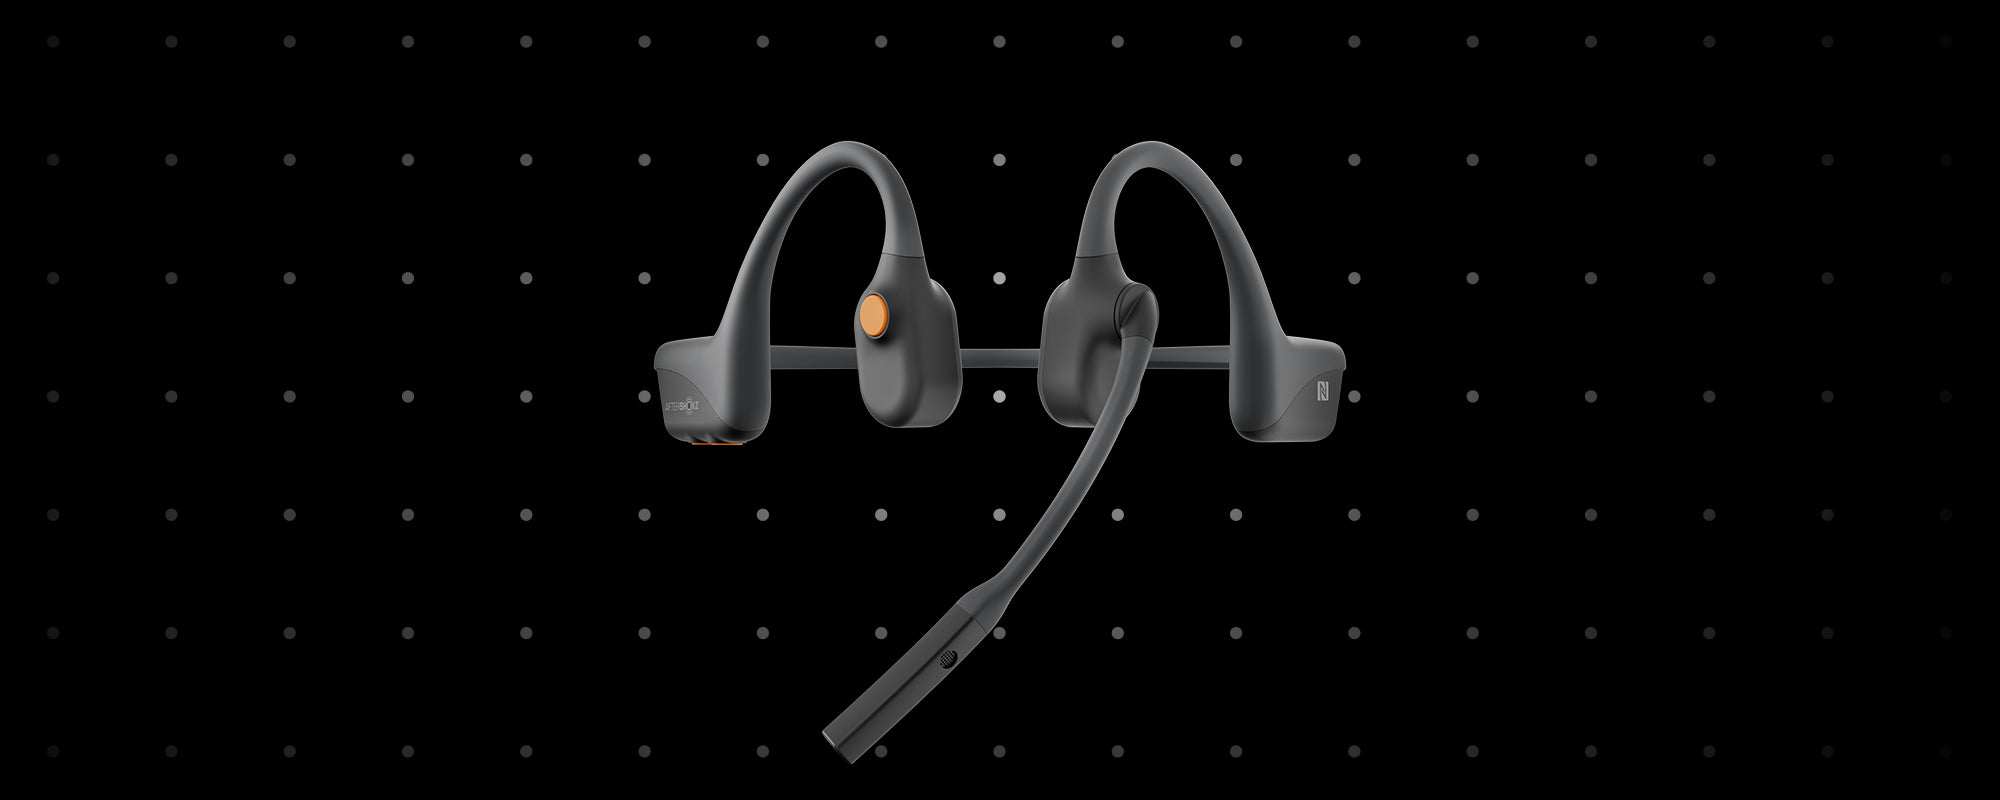 Introducing OpenComm: AfterShokz Open-Ear Headset